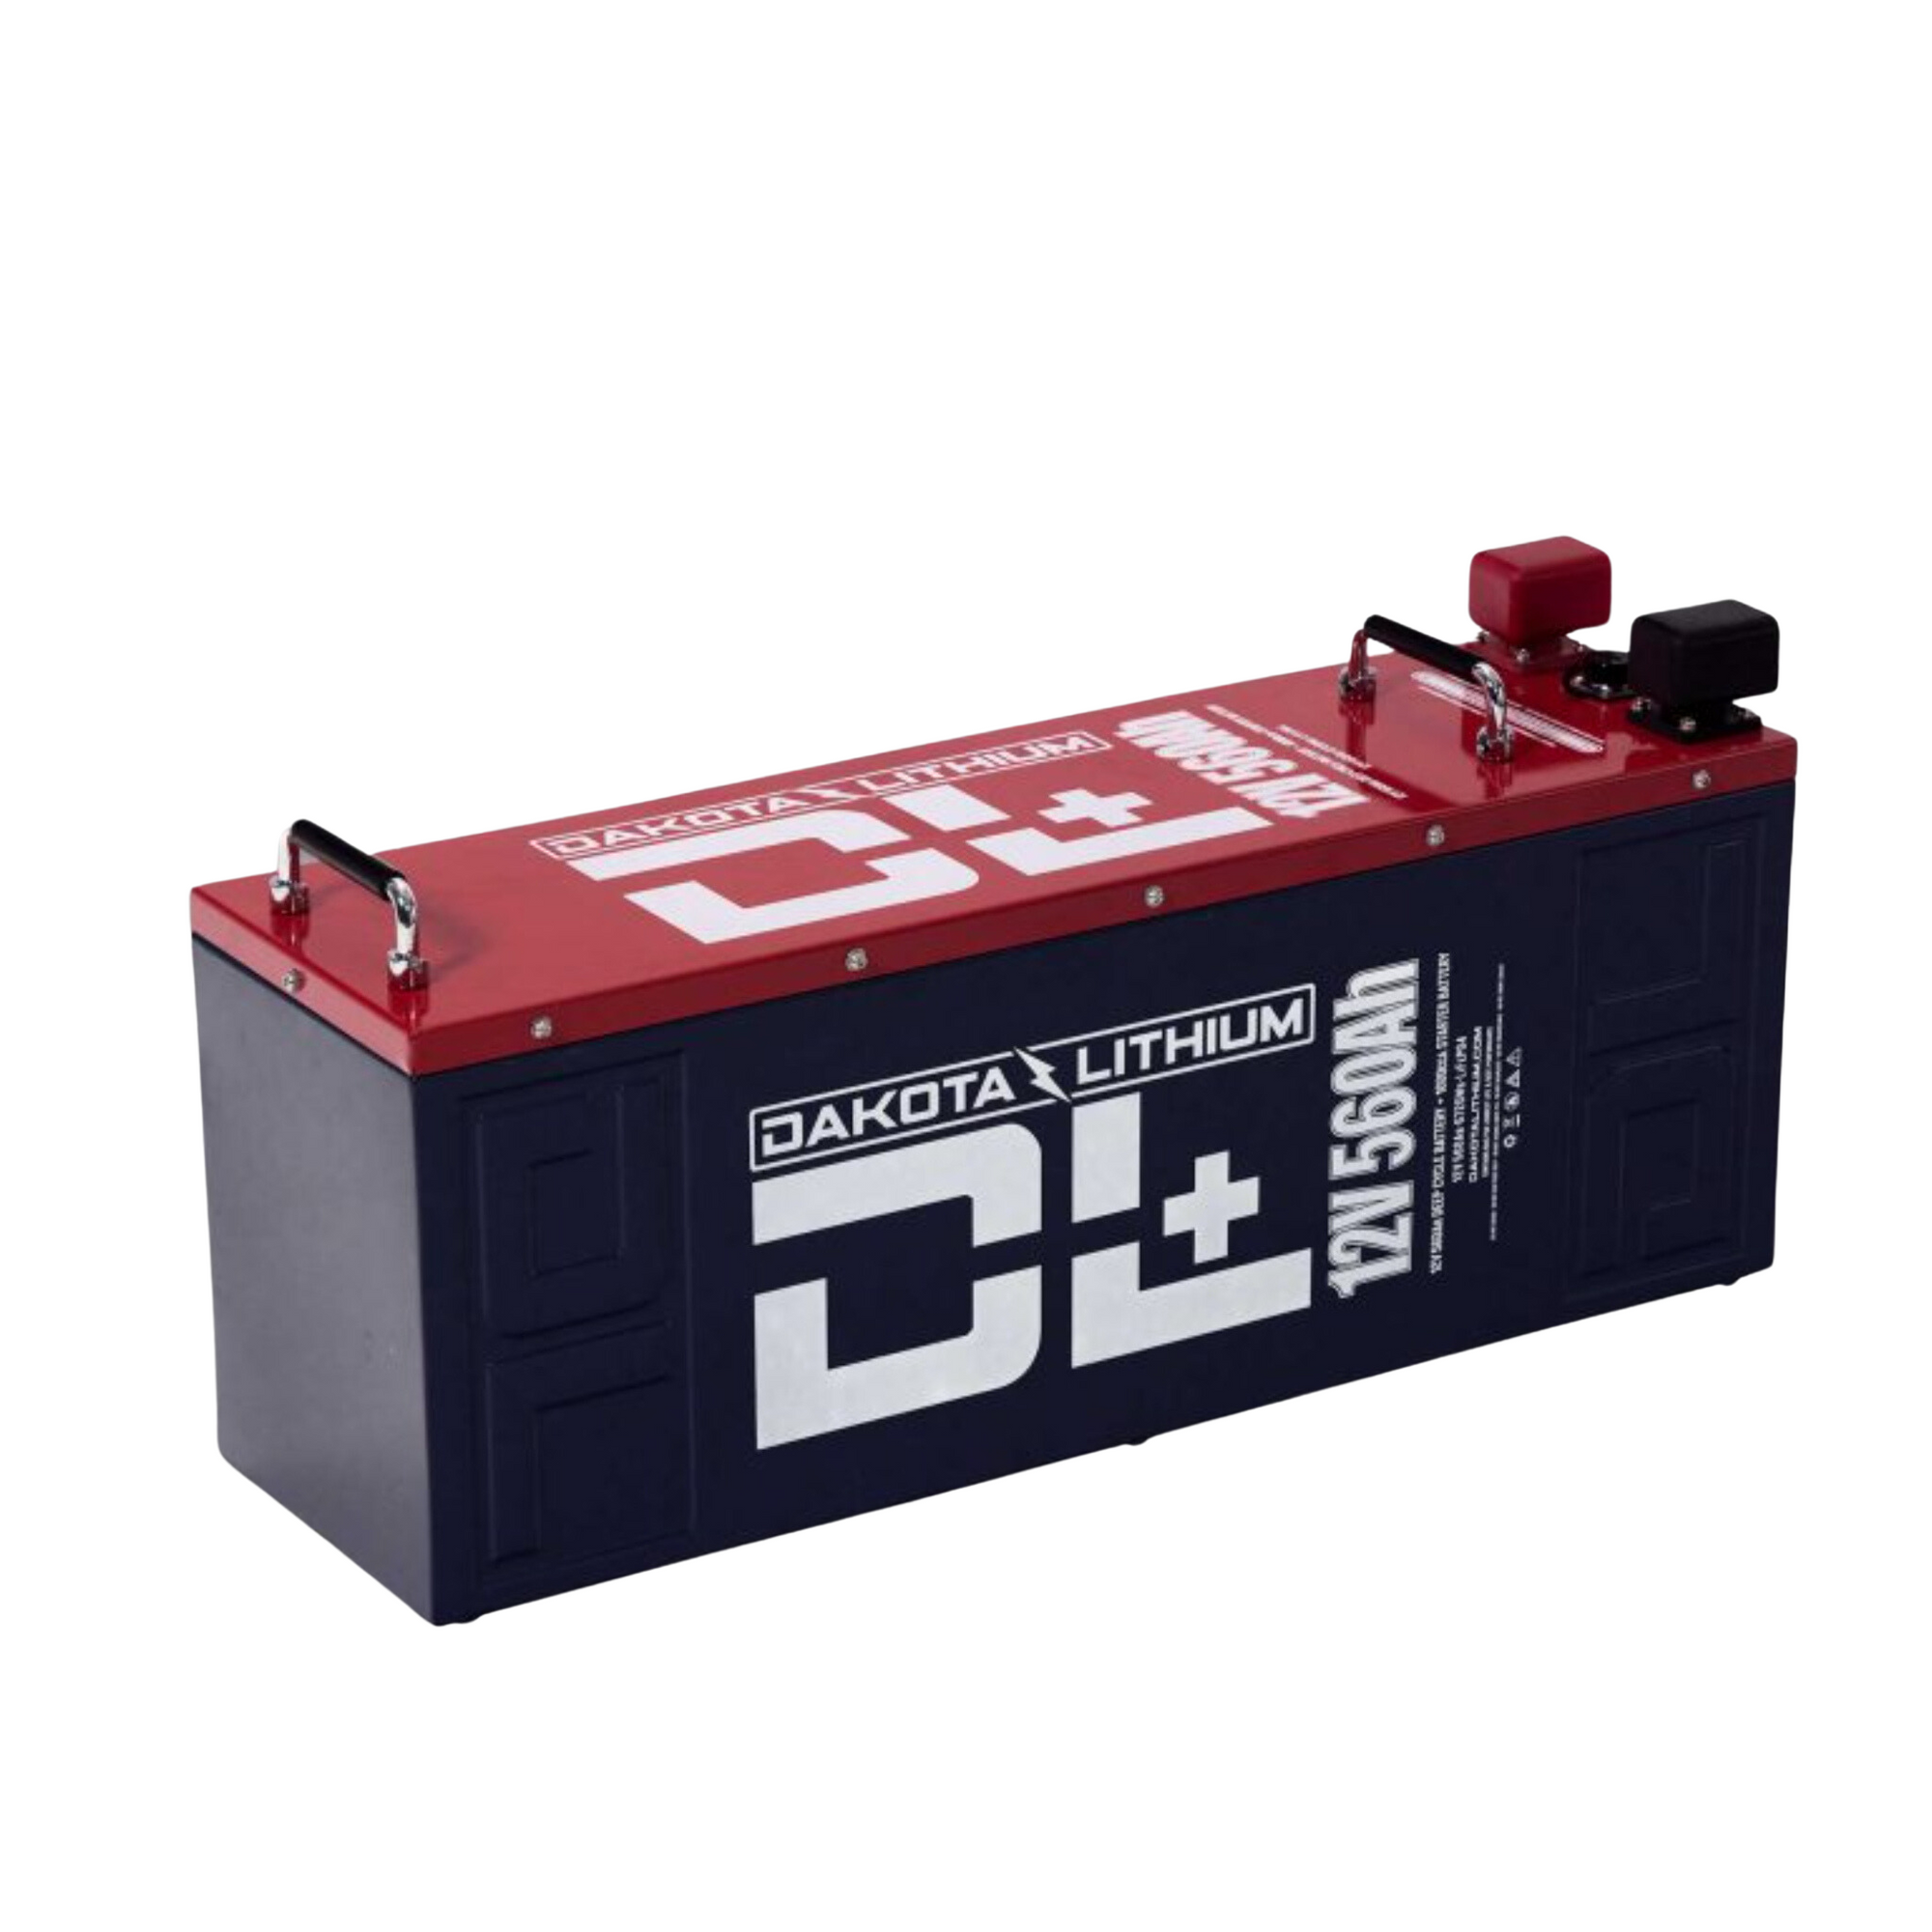 Dakota Lithium DL+ 12V 560Ah LiFePO4 Battery CAN Bus Port Included